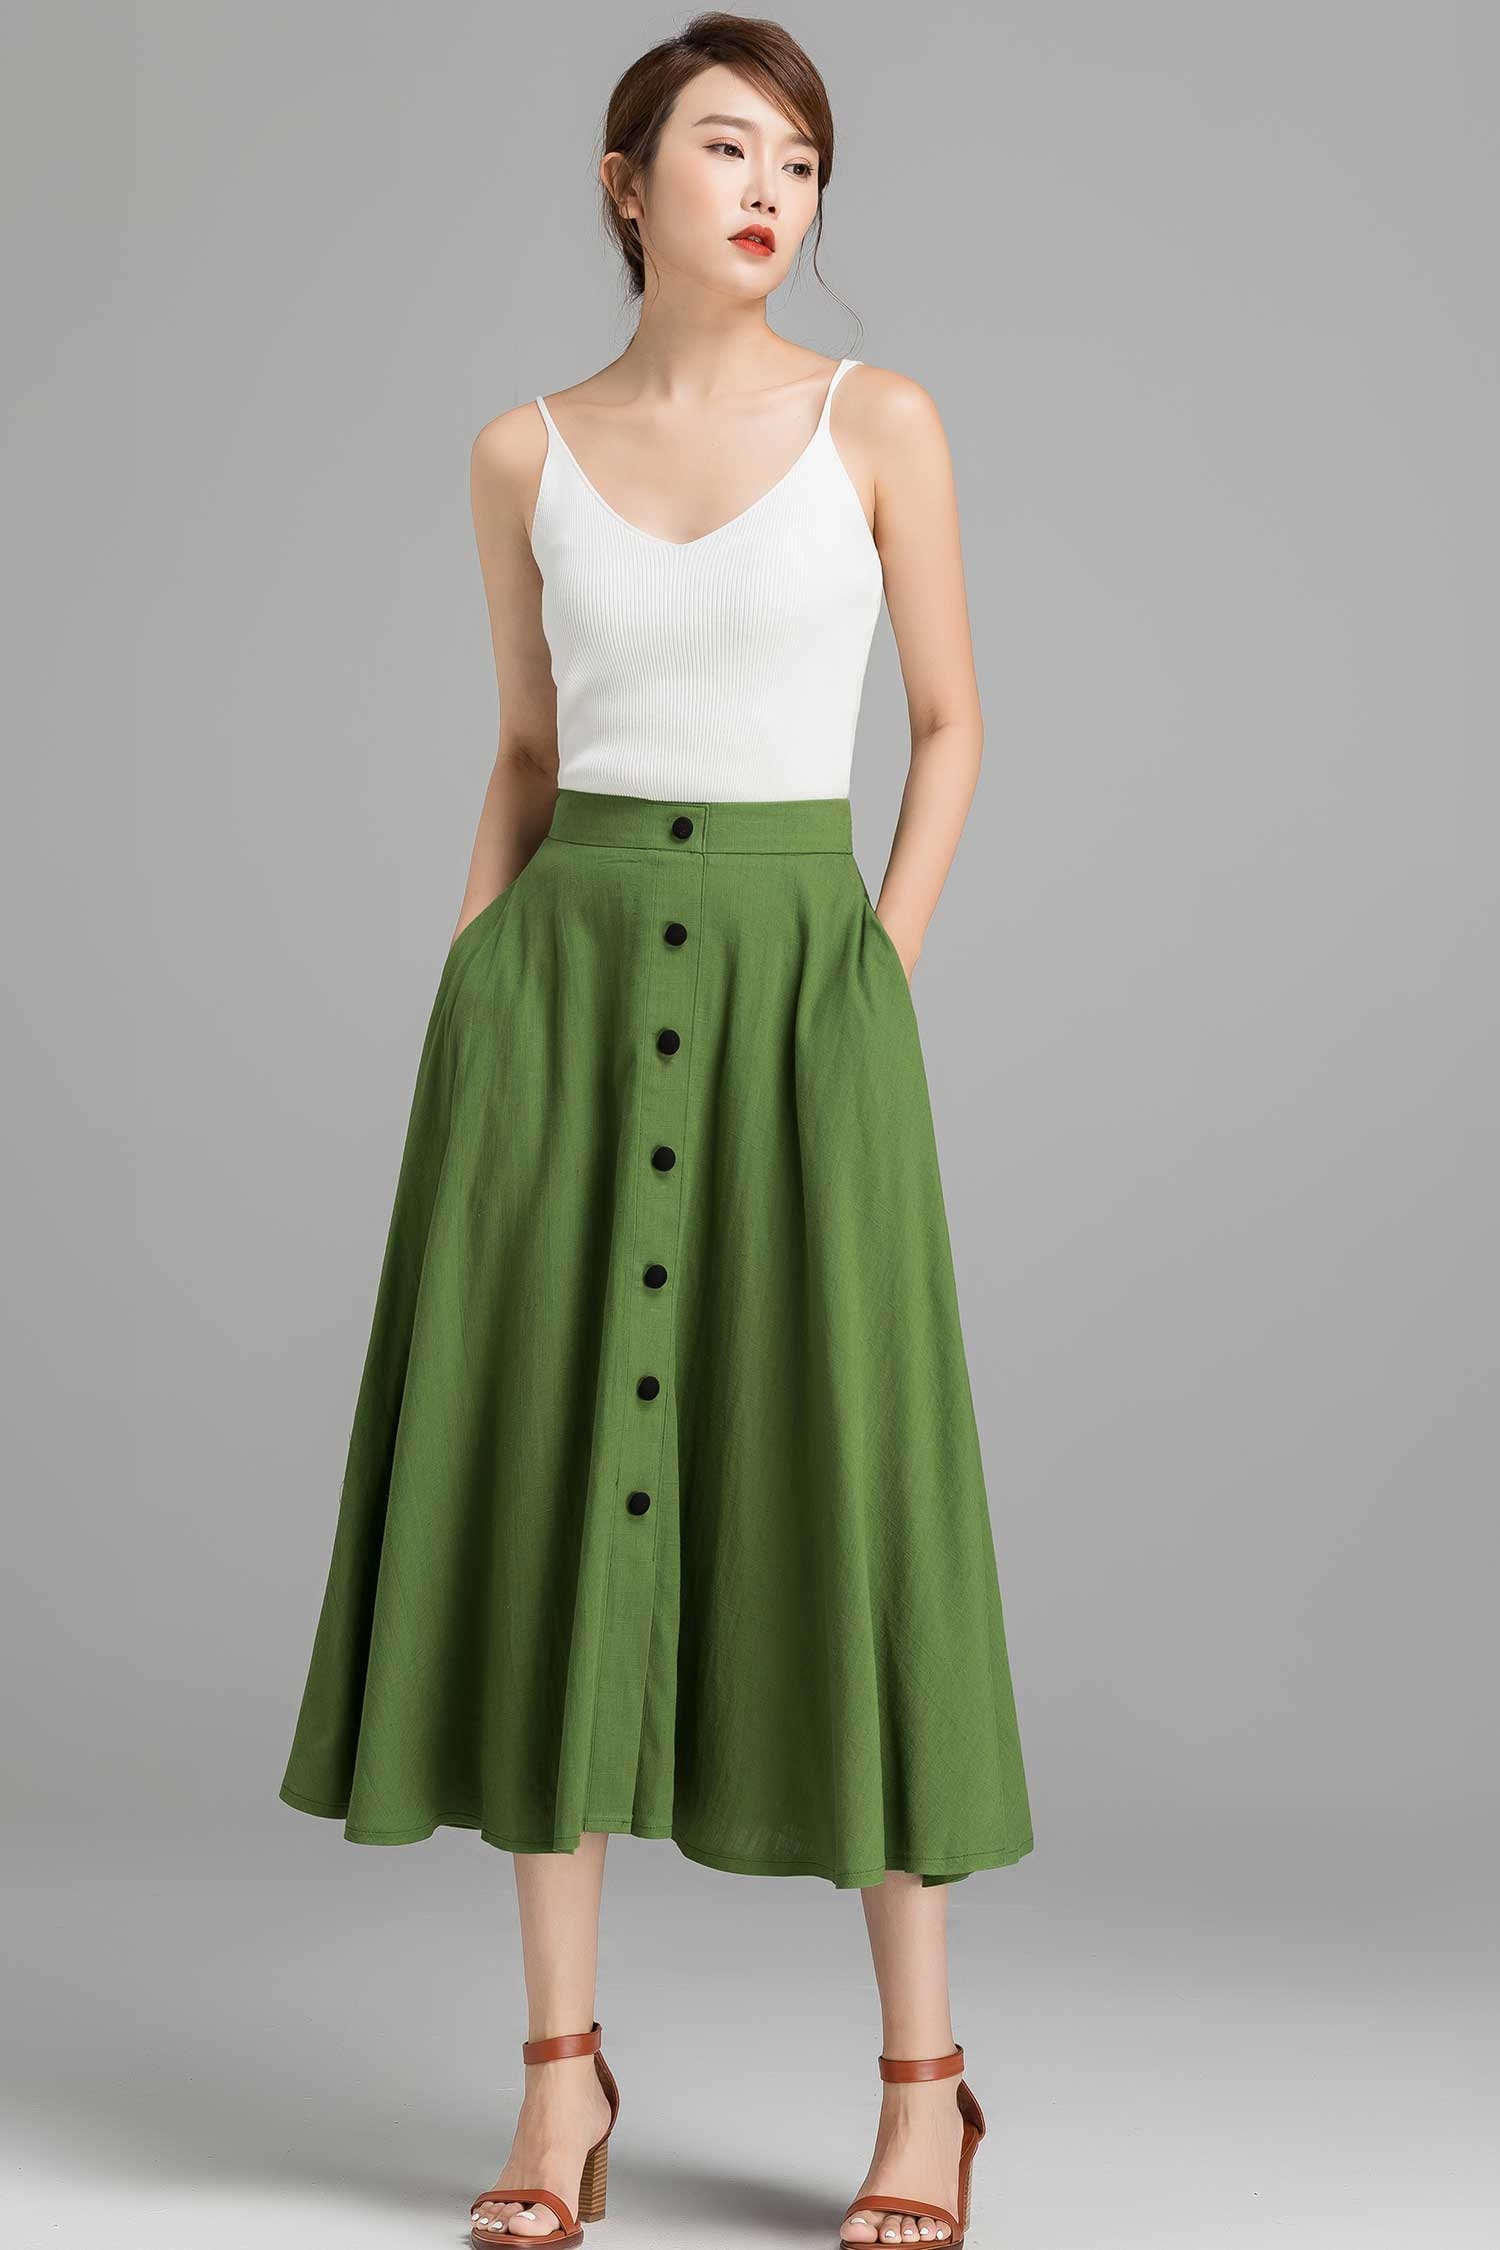 High waisted Button-Down Midi skirt A Line swing skirt Linen | Etsy